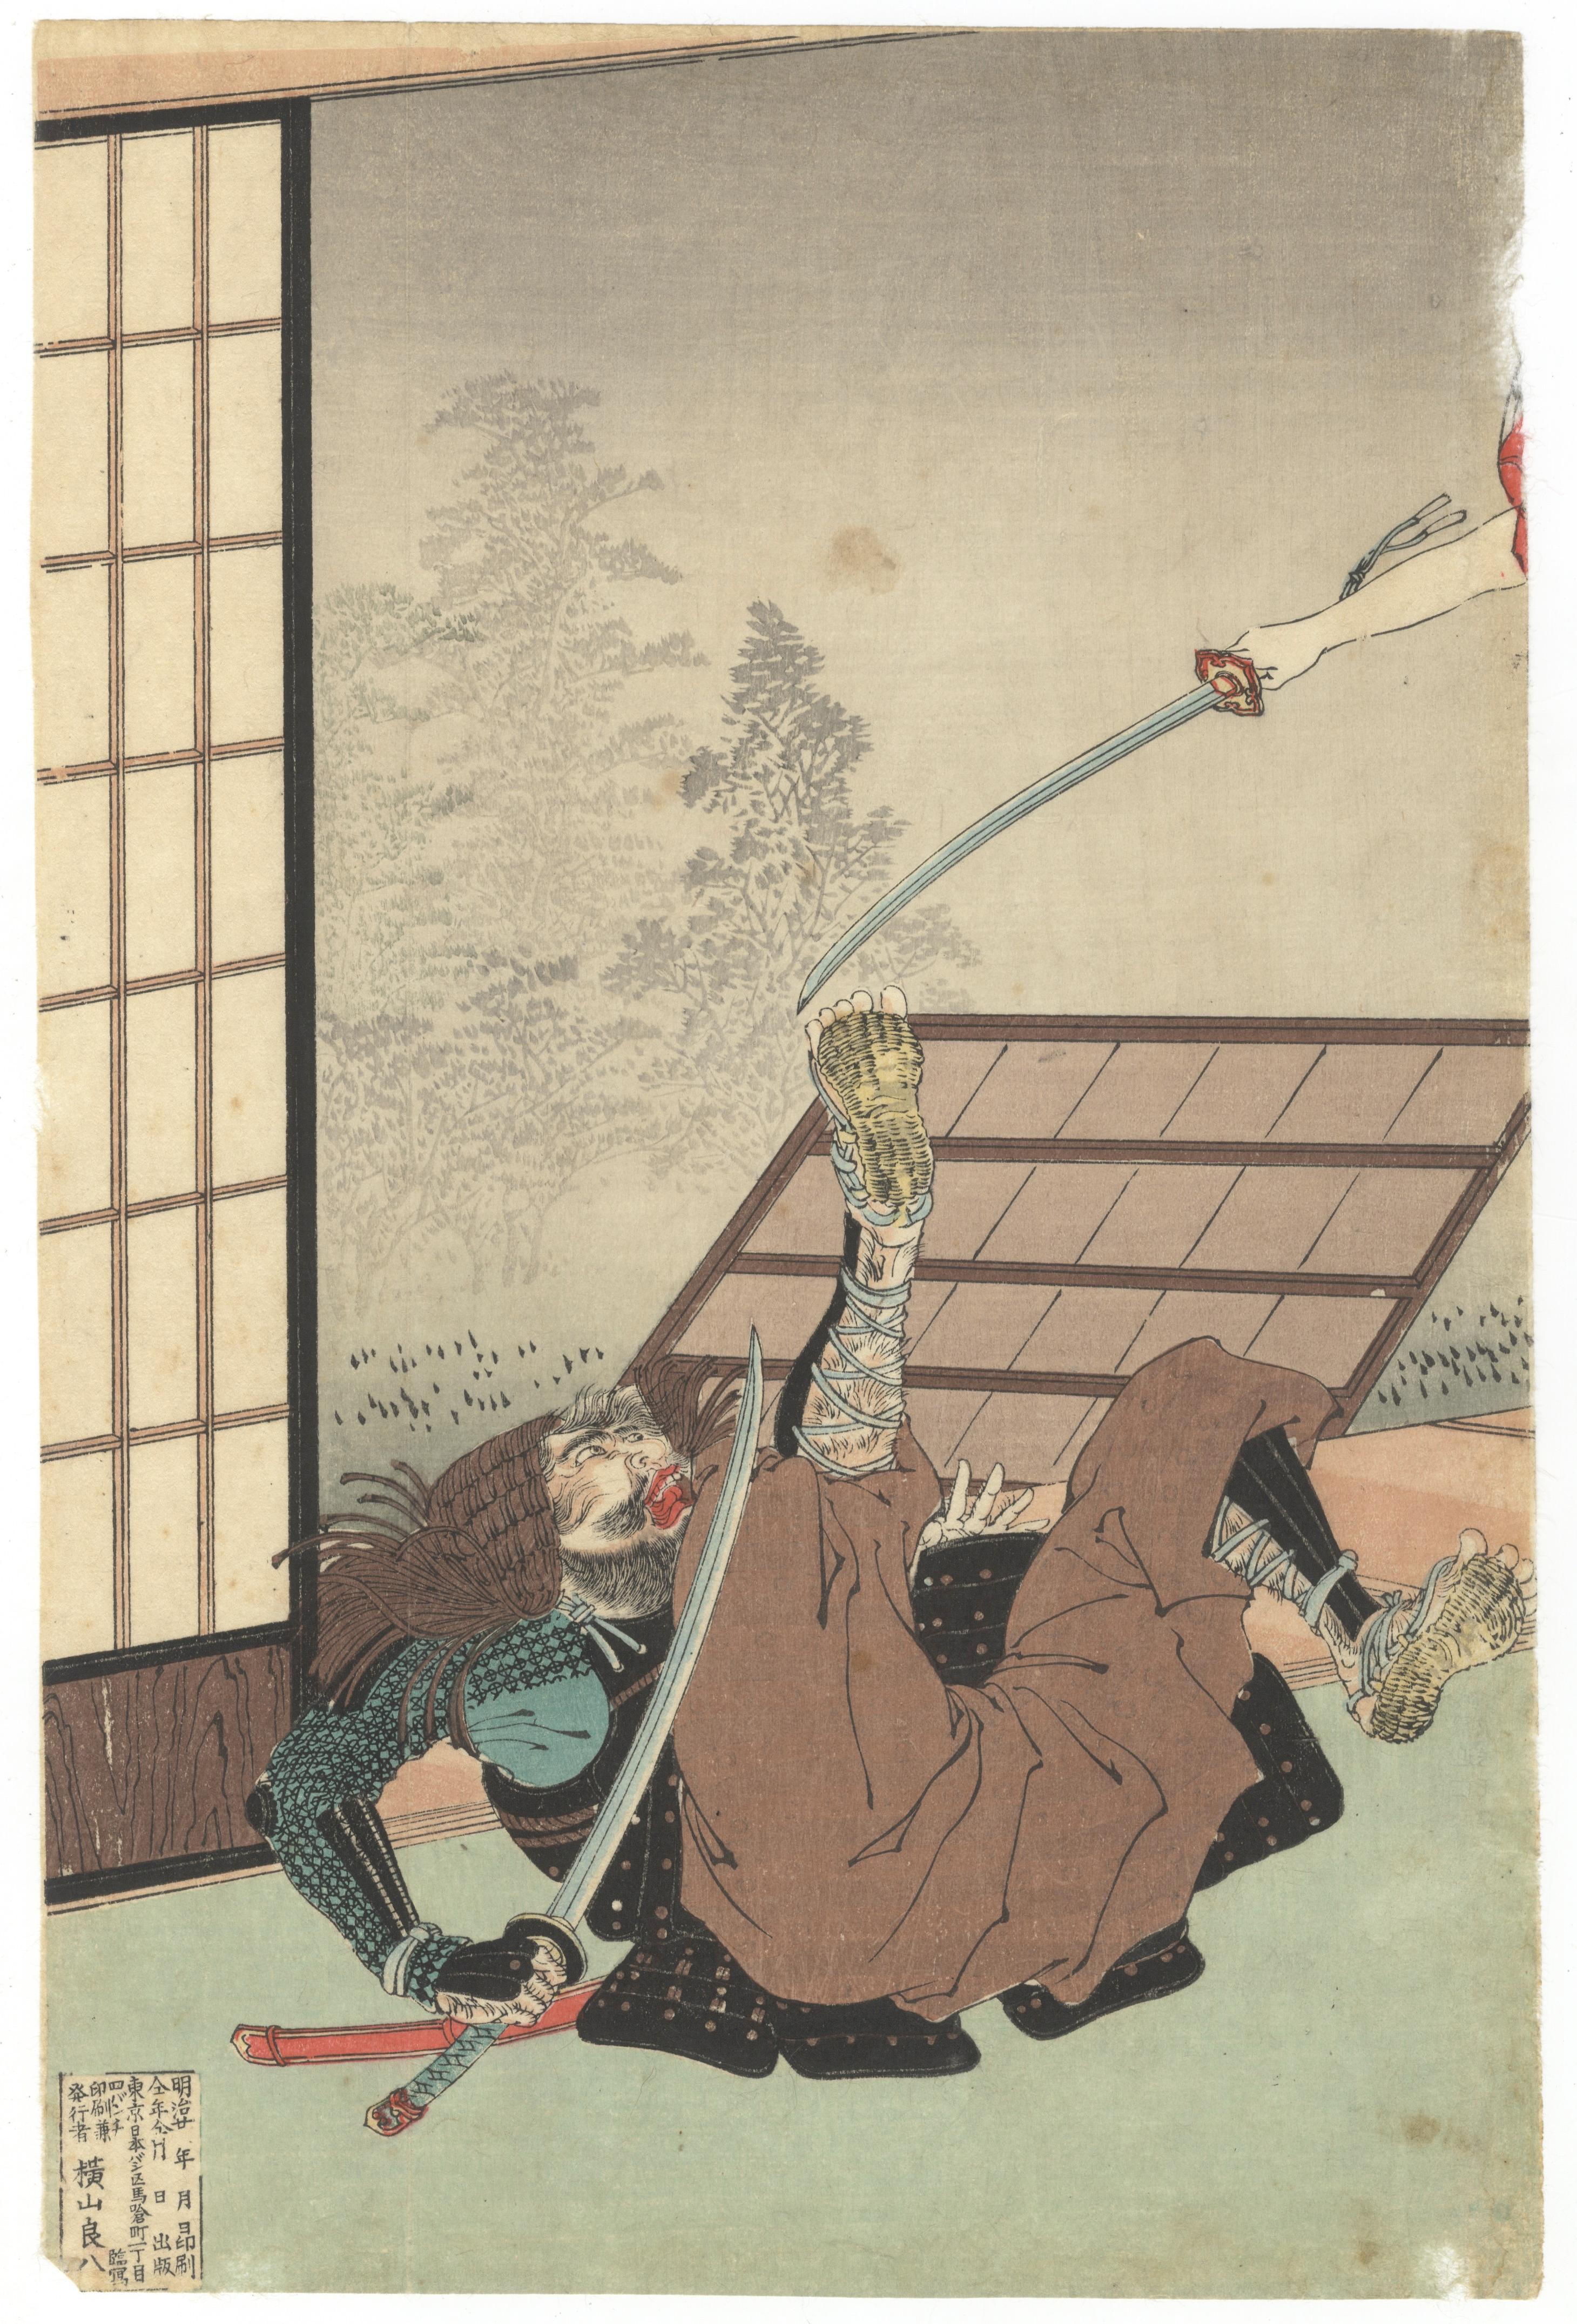 samurai ukiyo-e